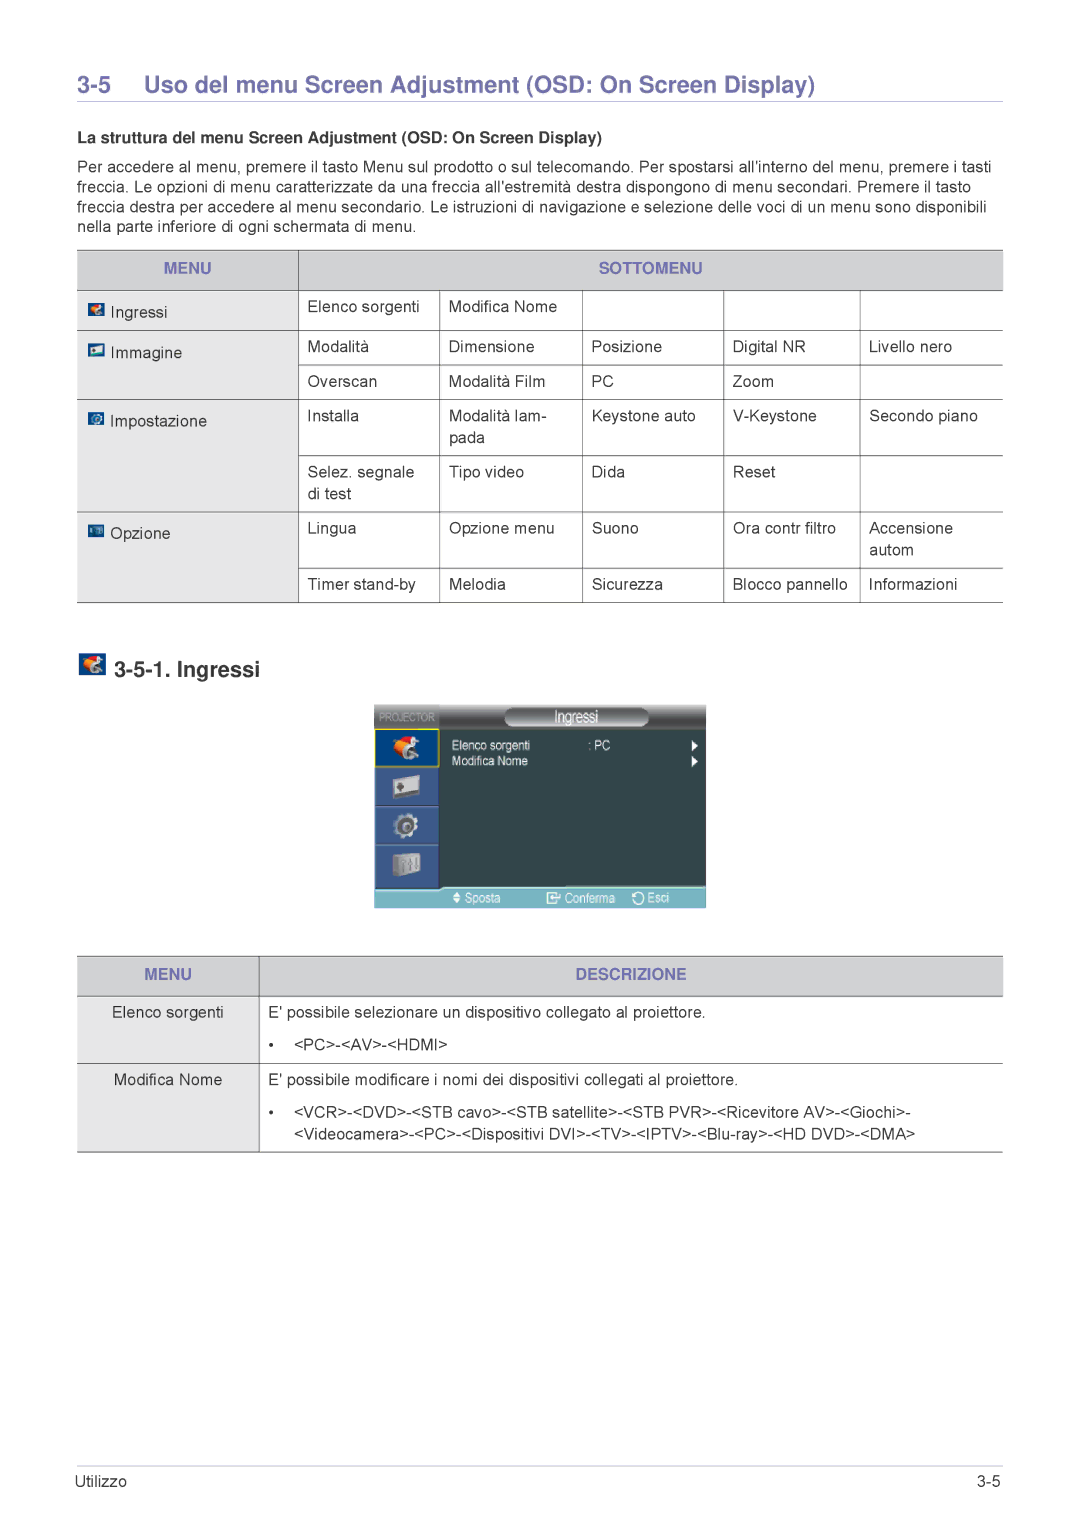 Samsung SP2203WWX/EN Uso del menu Screen Adjustment OSD On Screen Display, Ingressi, Menu Sottomenu, Menu Descrizione 